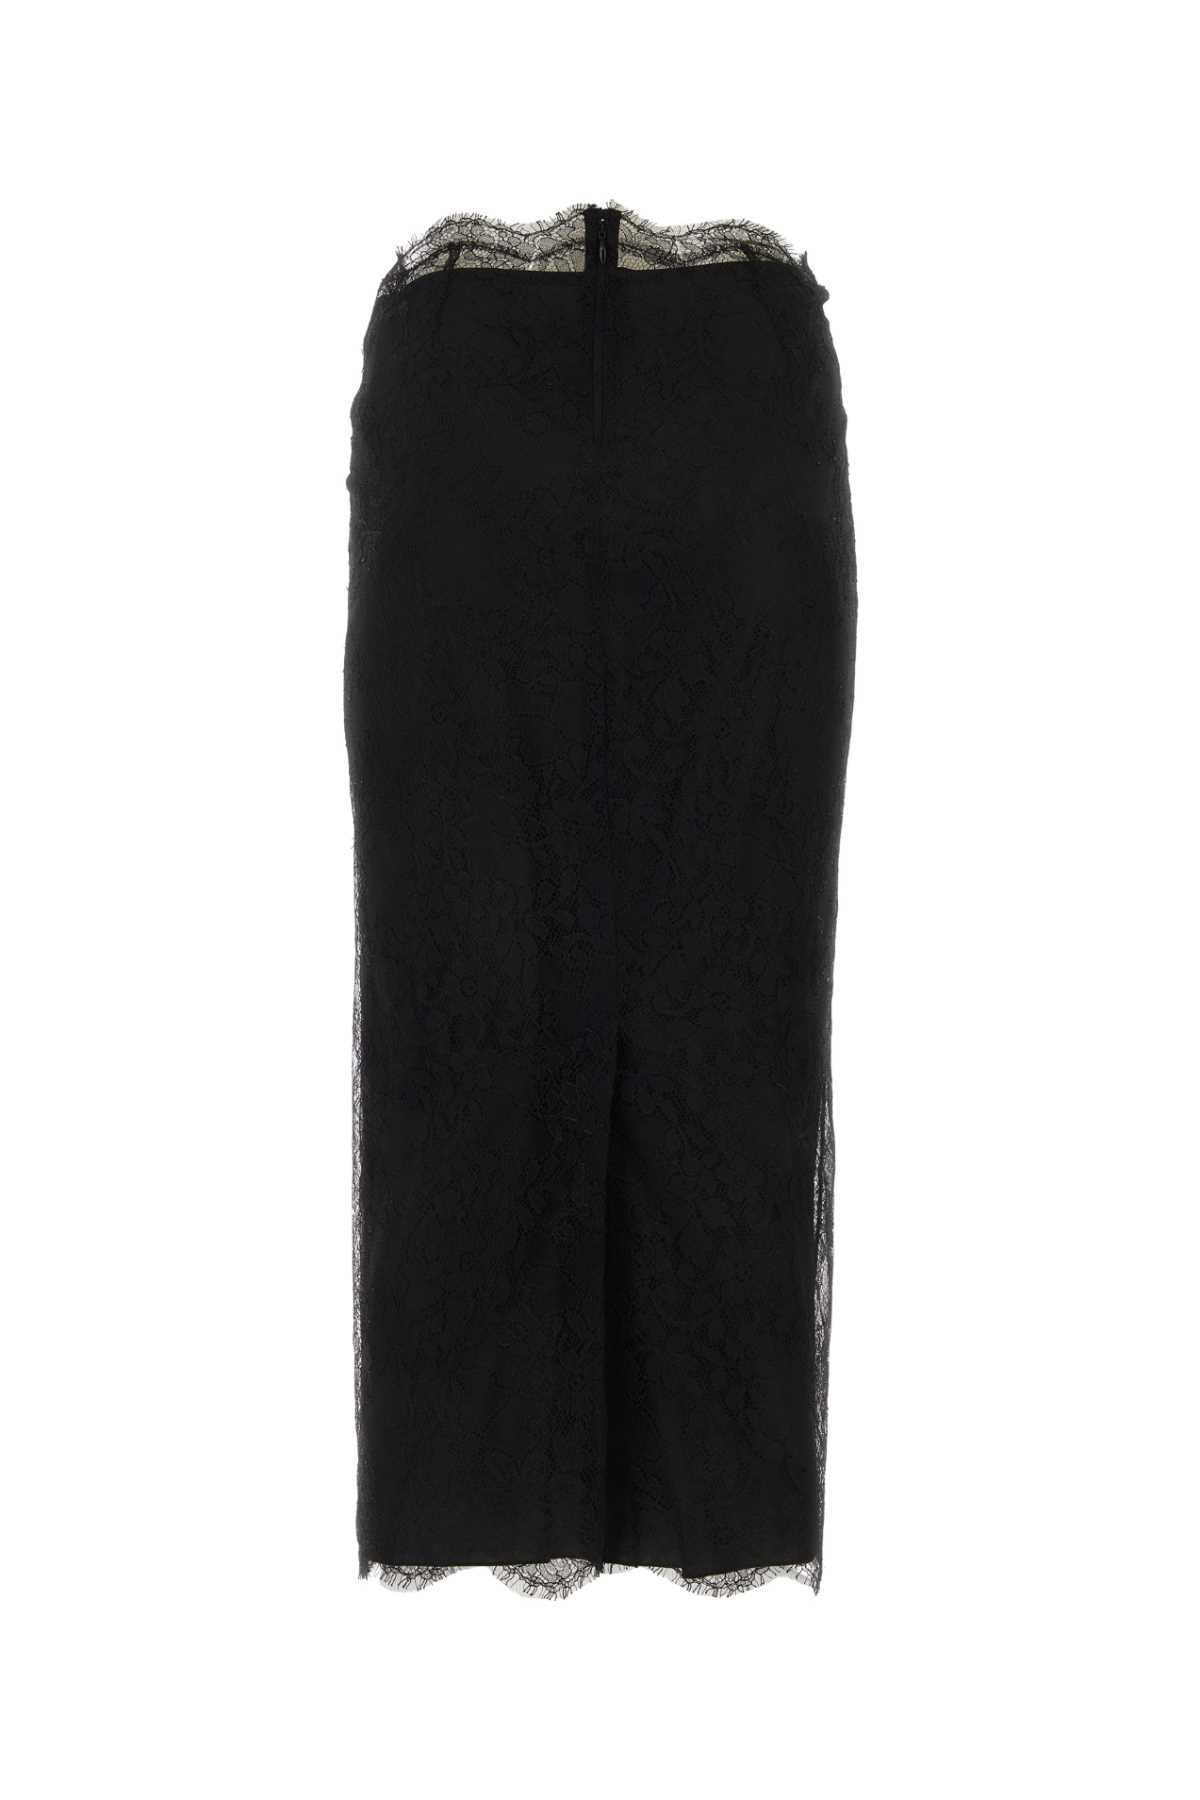 Dolce & Gabbana Black Lace Skirt In Nero